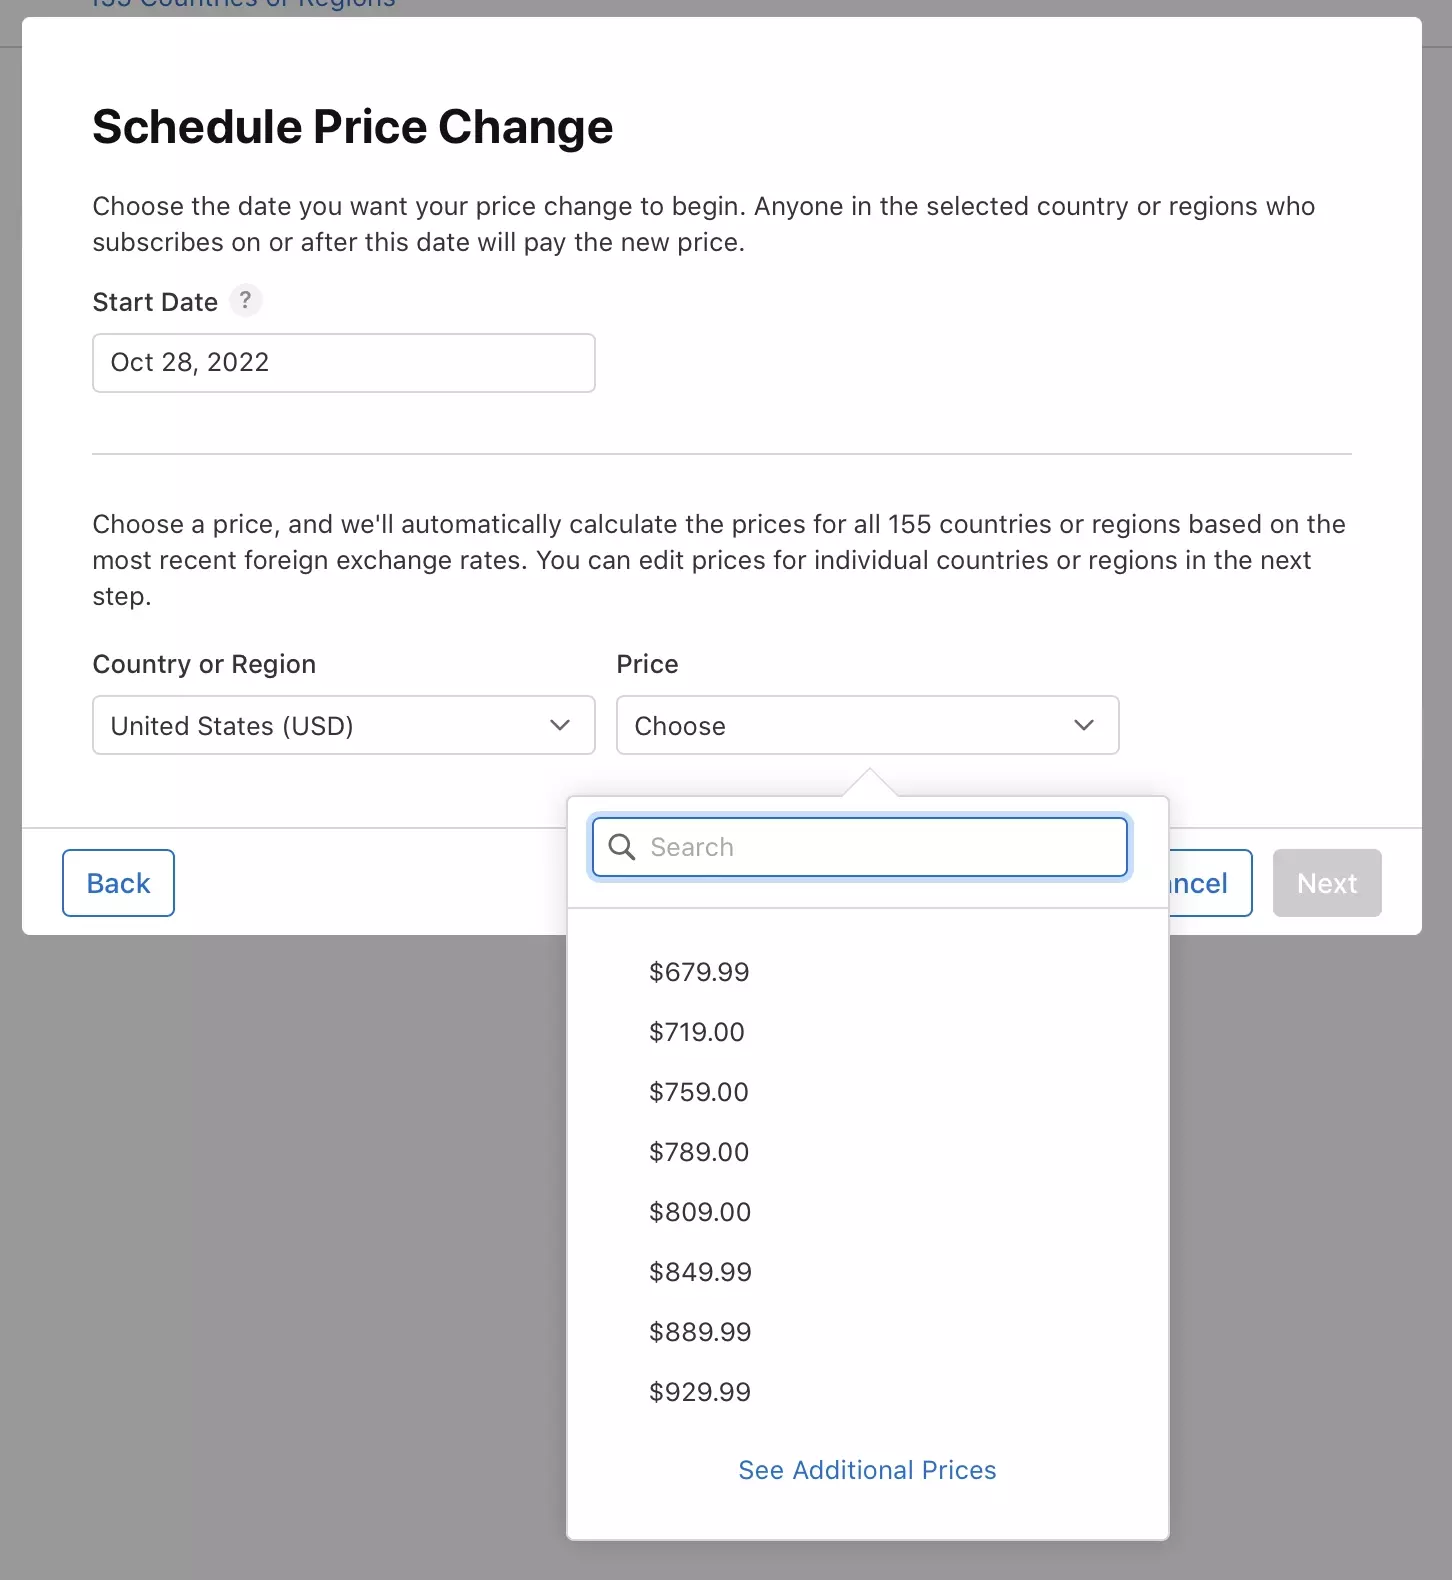 Apples Schedule Price Change Sample Image.